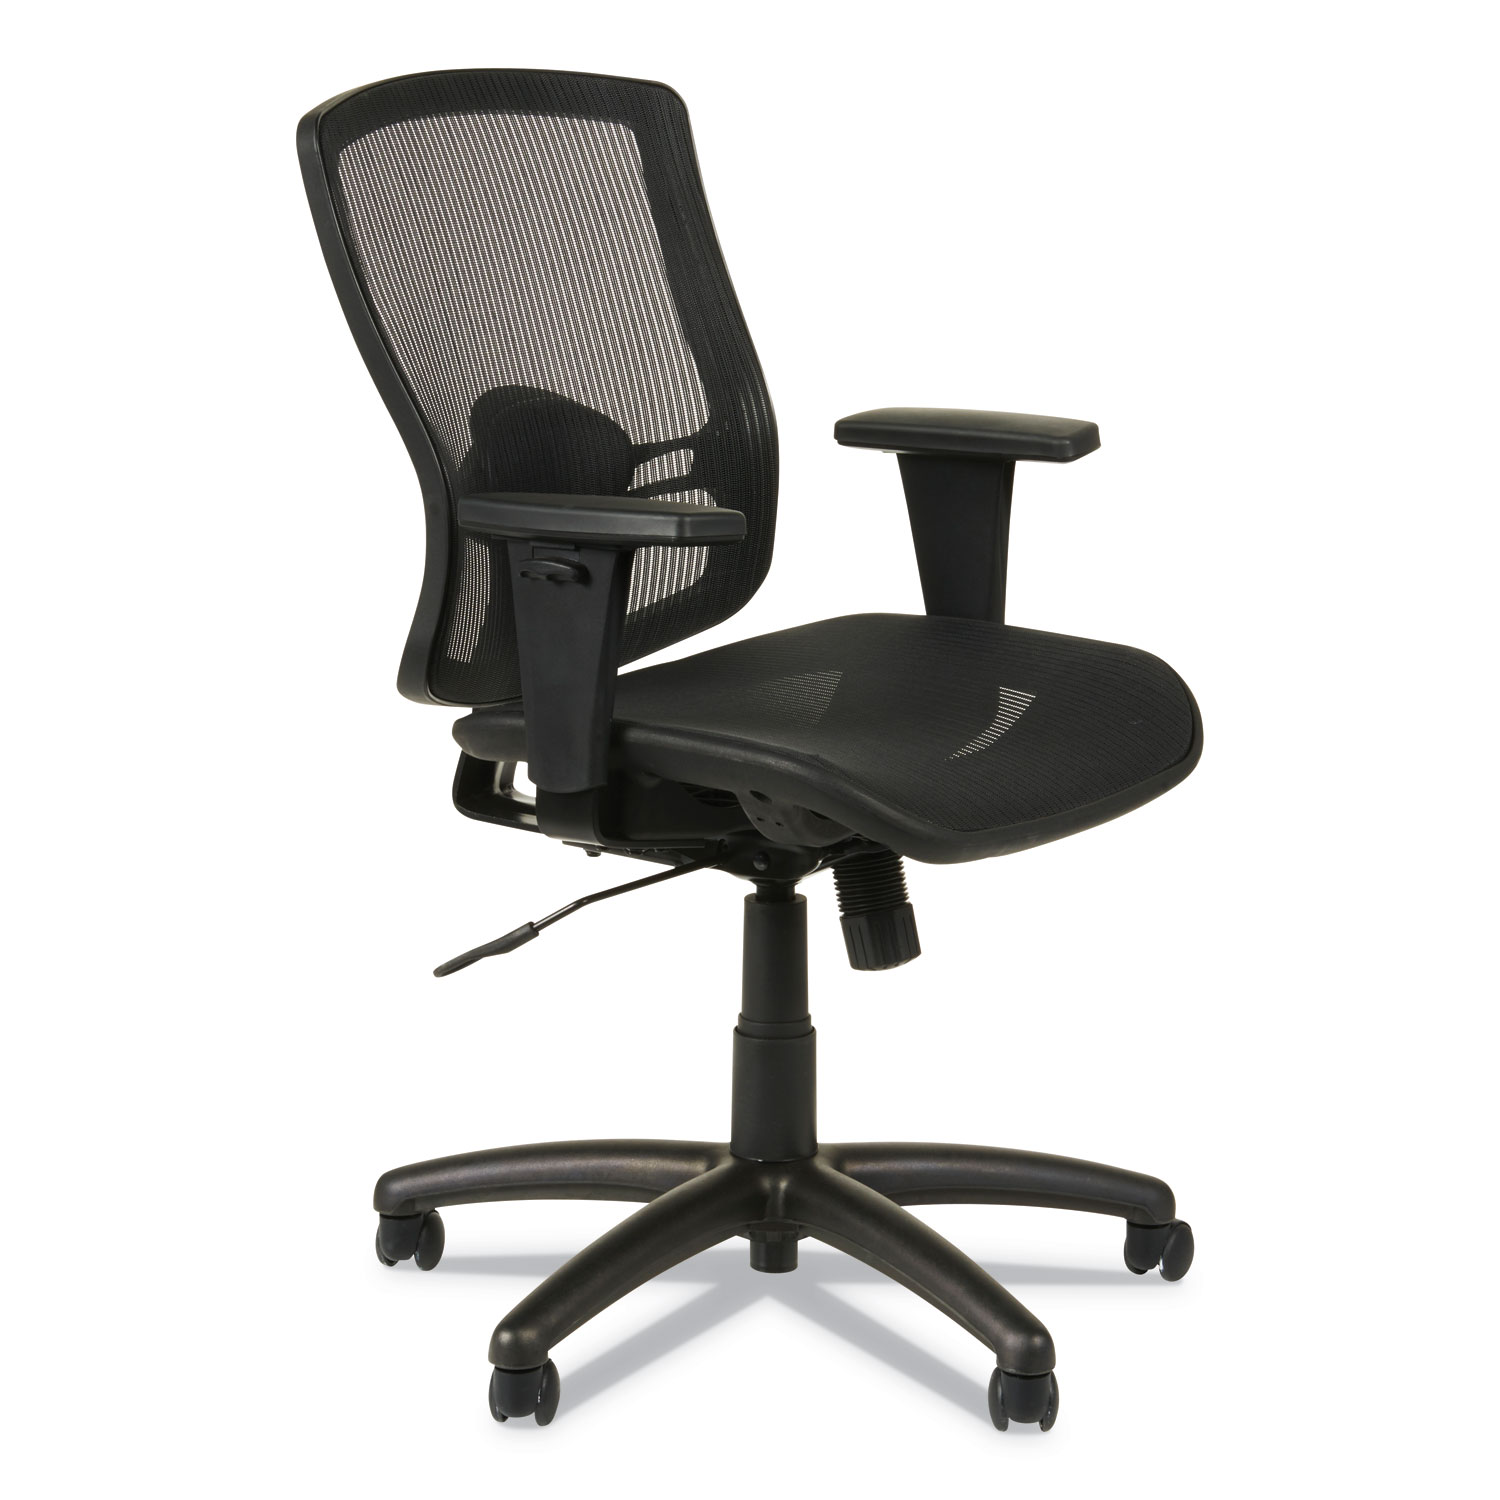  Alera ALEET4218 Alera Etros Series Suspension Mesh Mid-Back Synchro Tilt Chair, Supports up to 275 lbs., Black Seat/Black Back, Black Base (ALEET4218) 